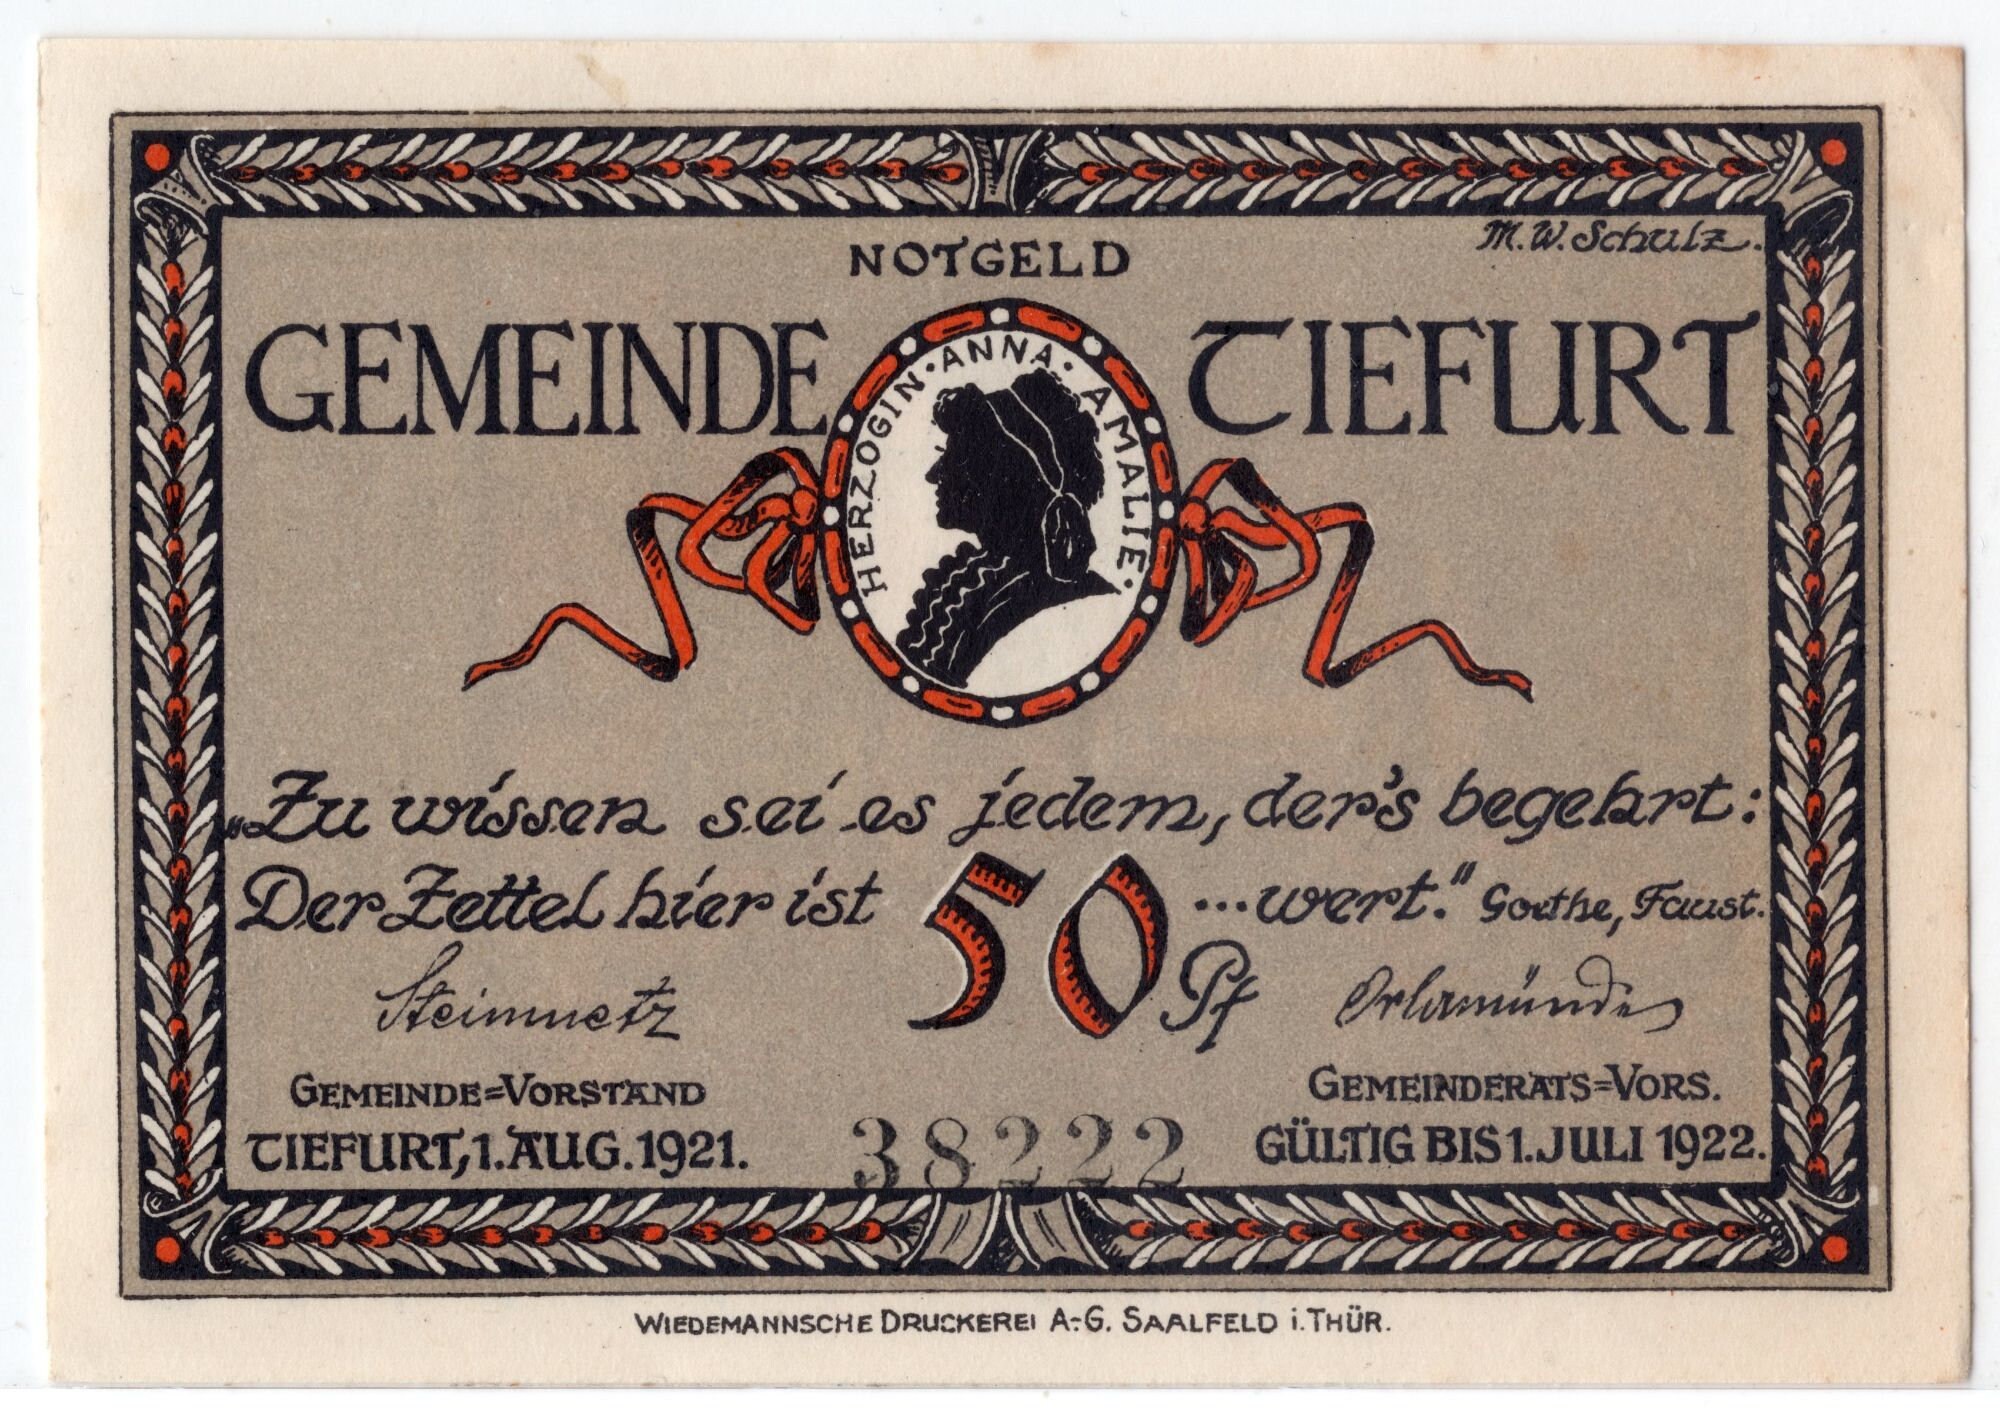 Germany/Notgeld 50 Pfennig 1922 P-Gra:1323.1a-3/4 Tiefurt | Etsy